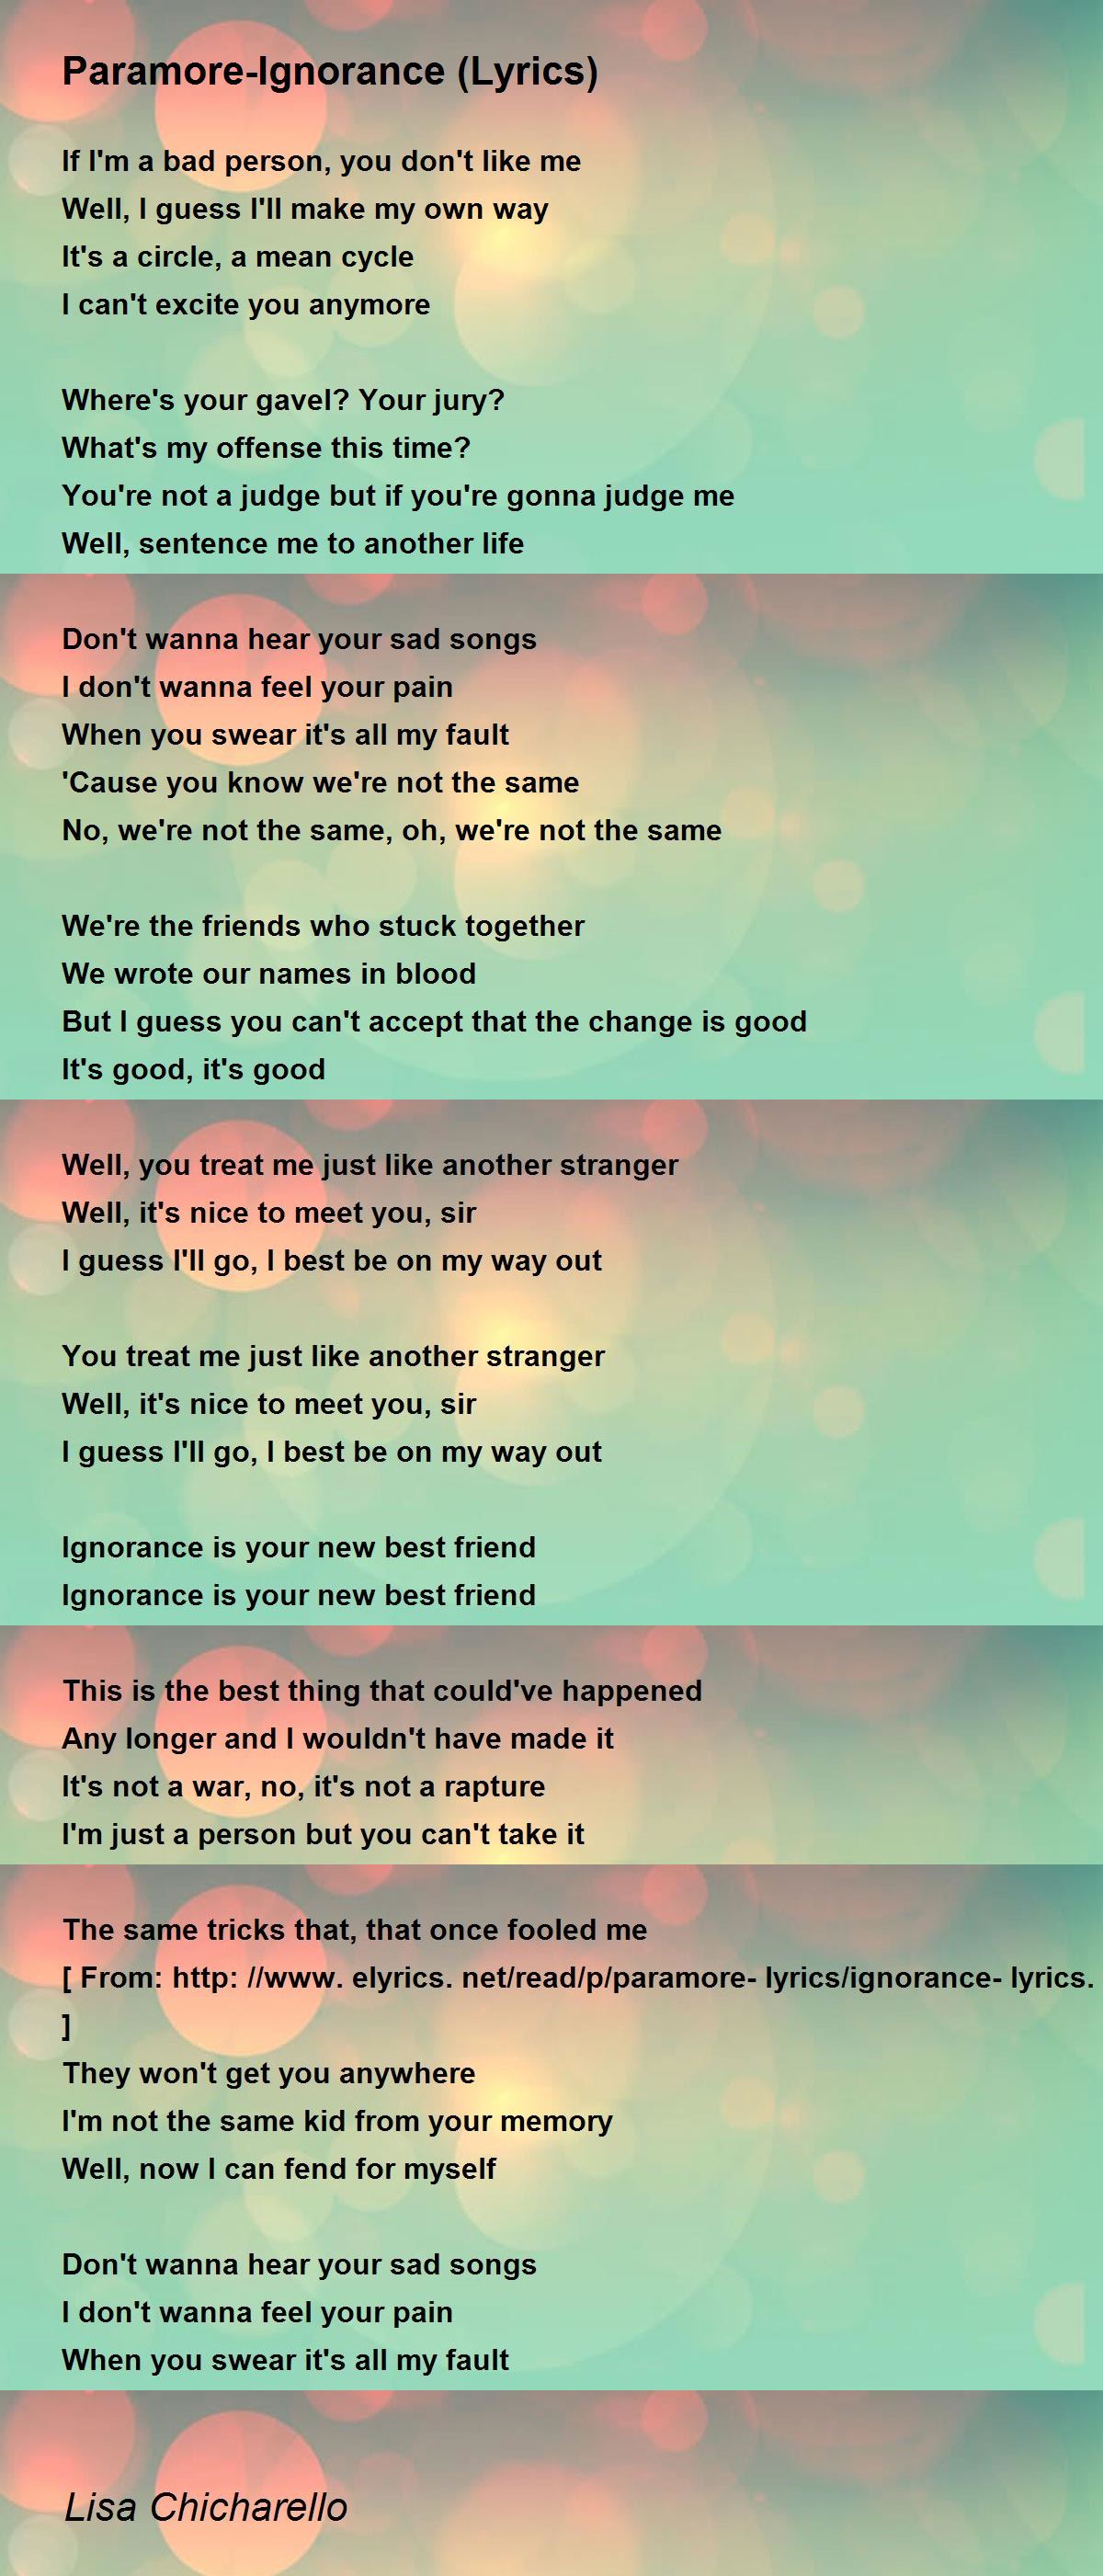 Paramore-Ignorance (Lyrics) - Paramore-Ignorance (Lyrics) Poem by